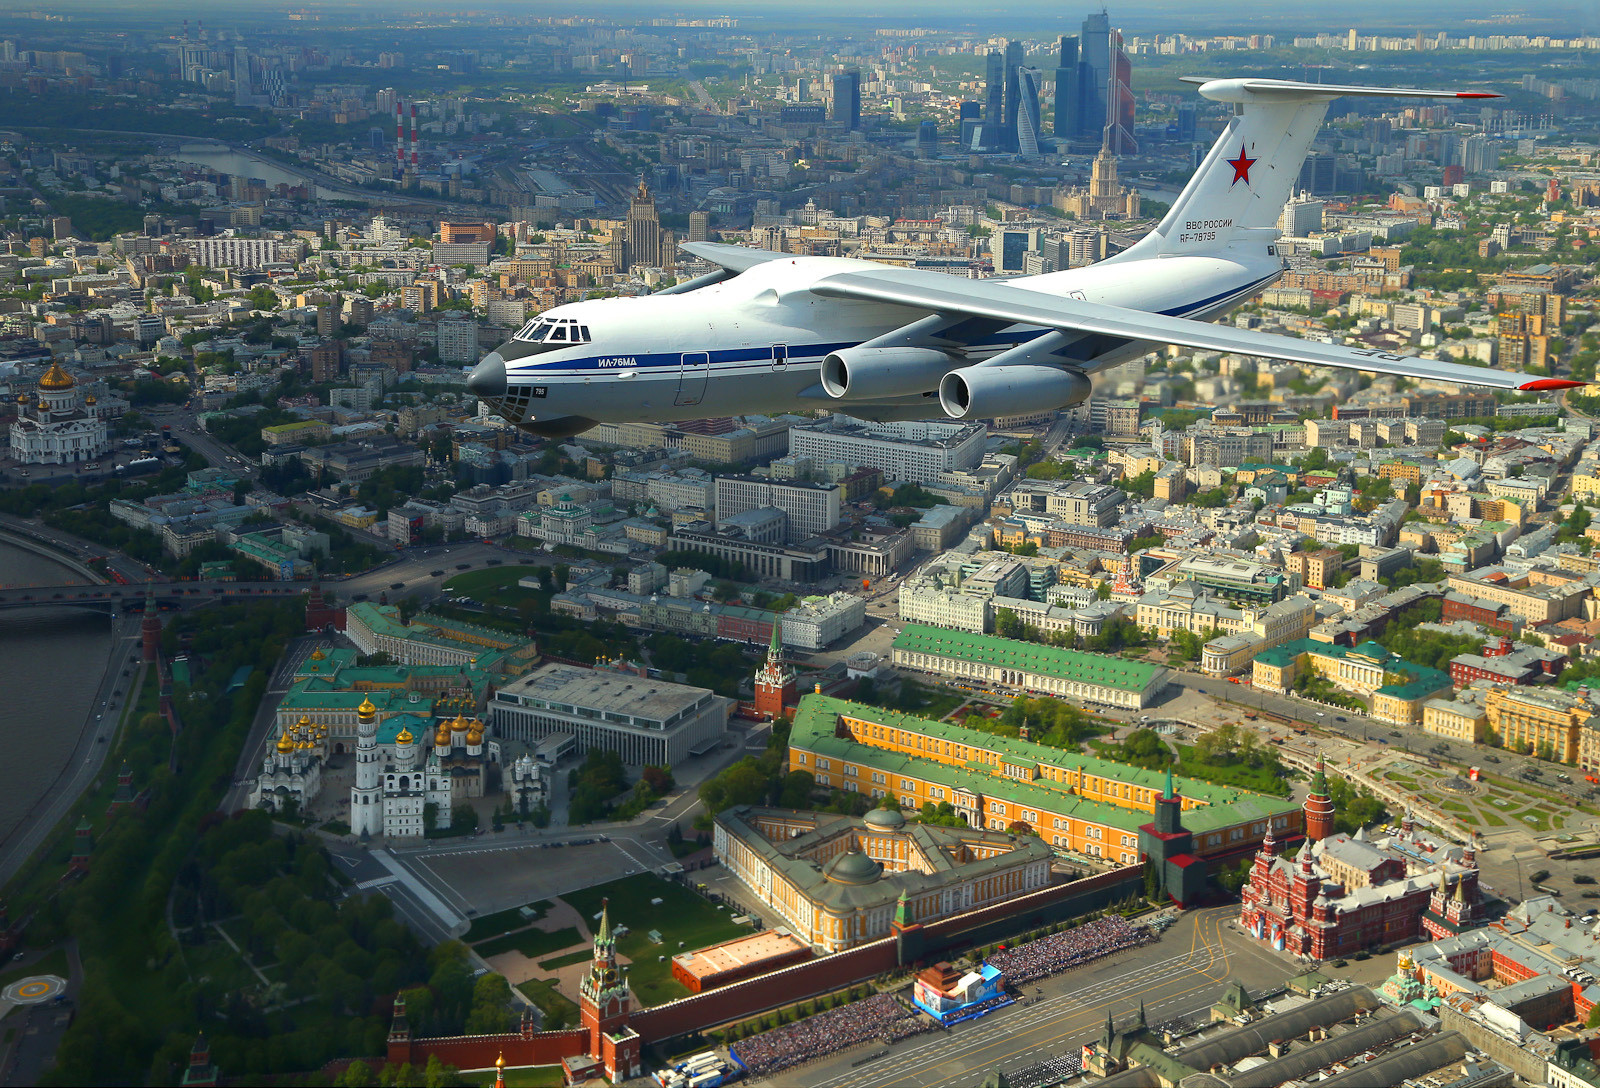 The Ilyushin Il-76, a multi-purpose four-engine turbofan strategic airlifter, above the Kremlin.